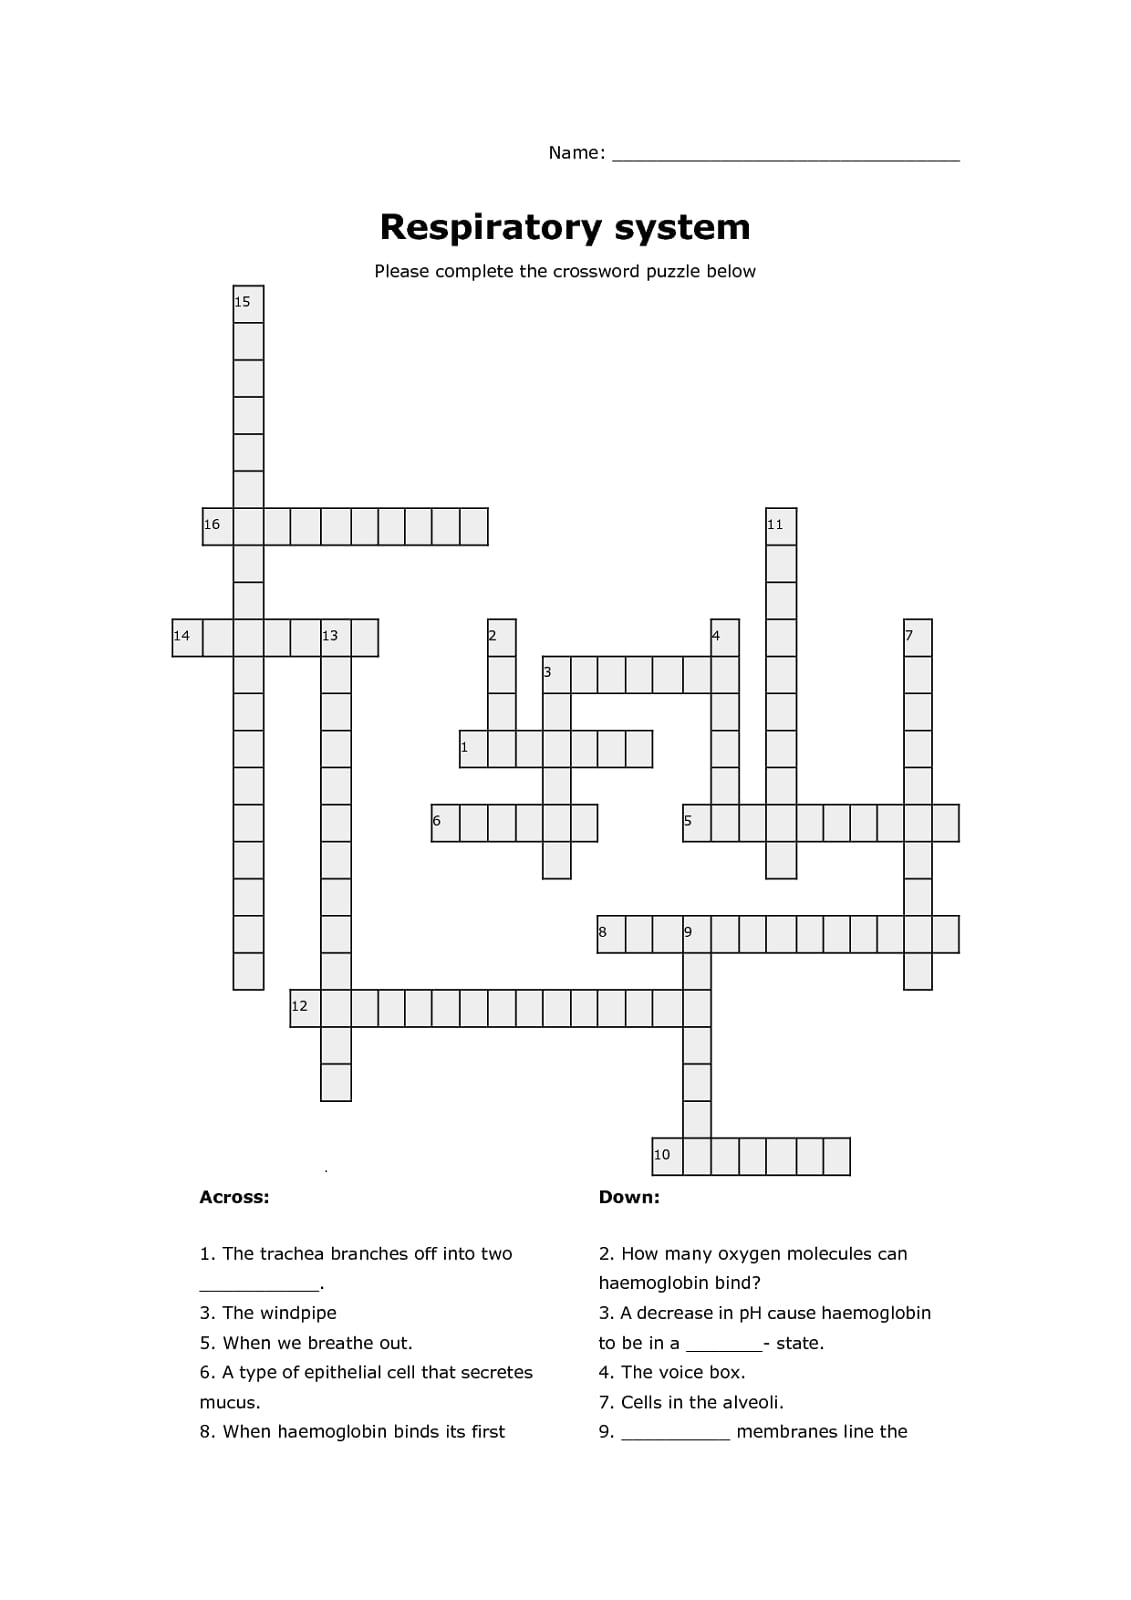 Online Crossword Puzzles Net Printable__42600